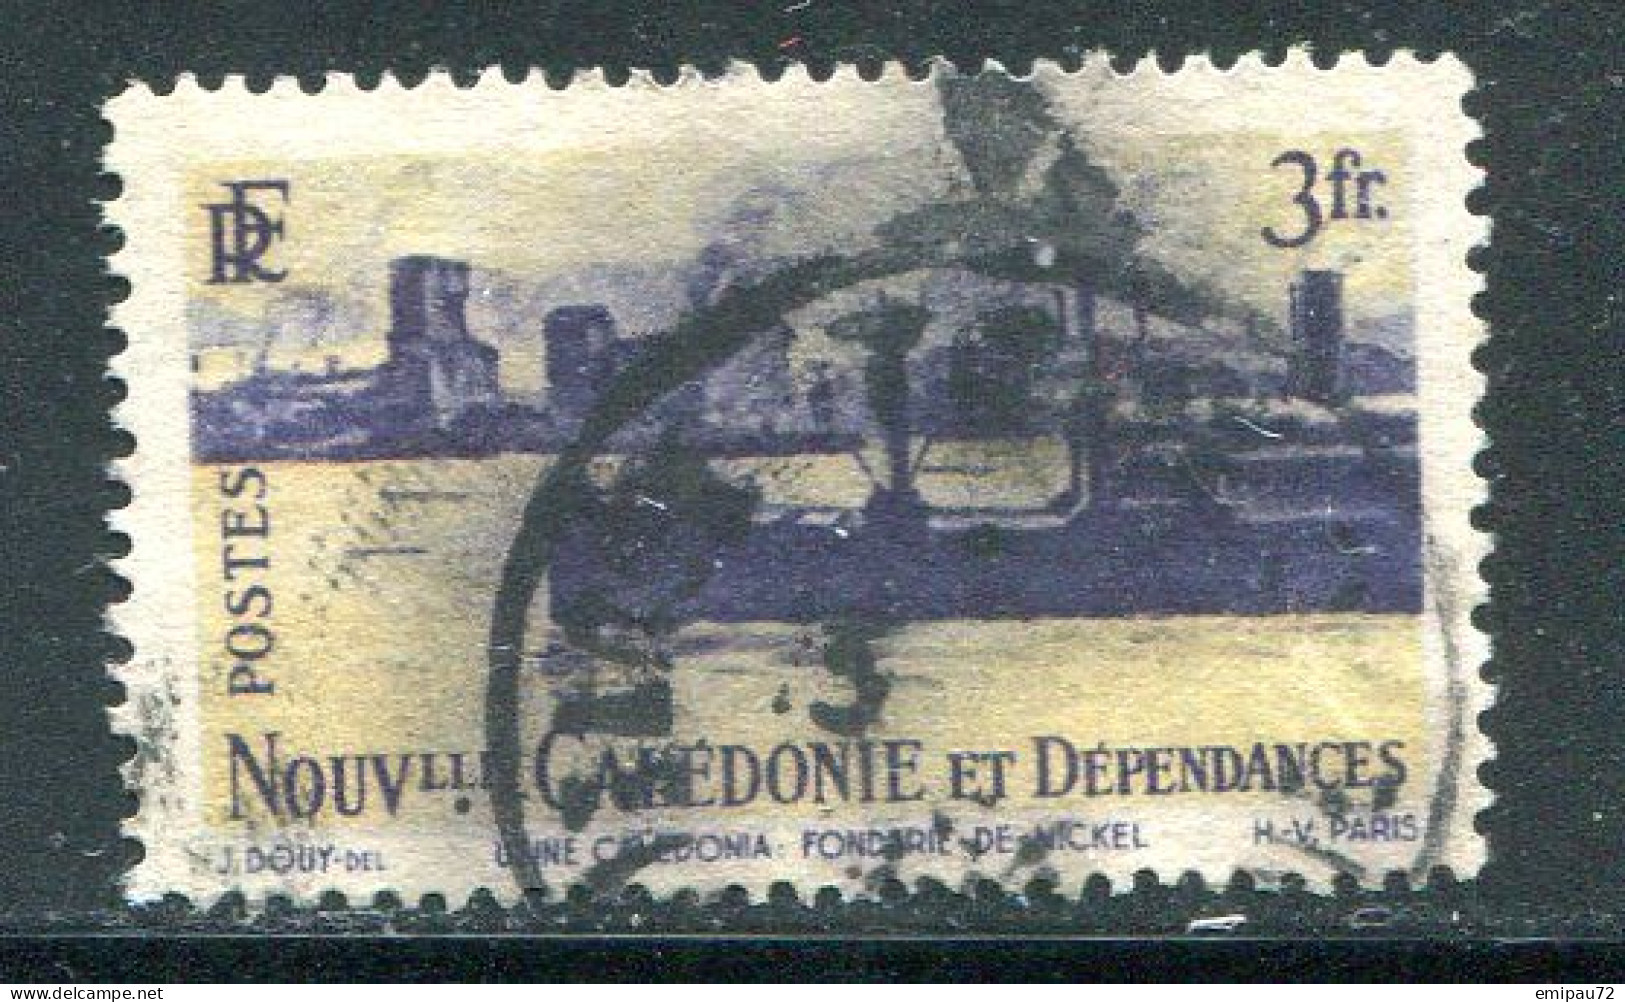 NOUVELLE CALEDONIE- Y&T N°270- Oblitéré - Used Stamps